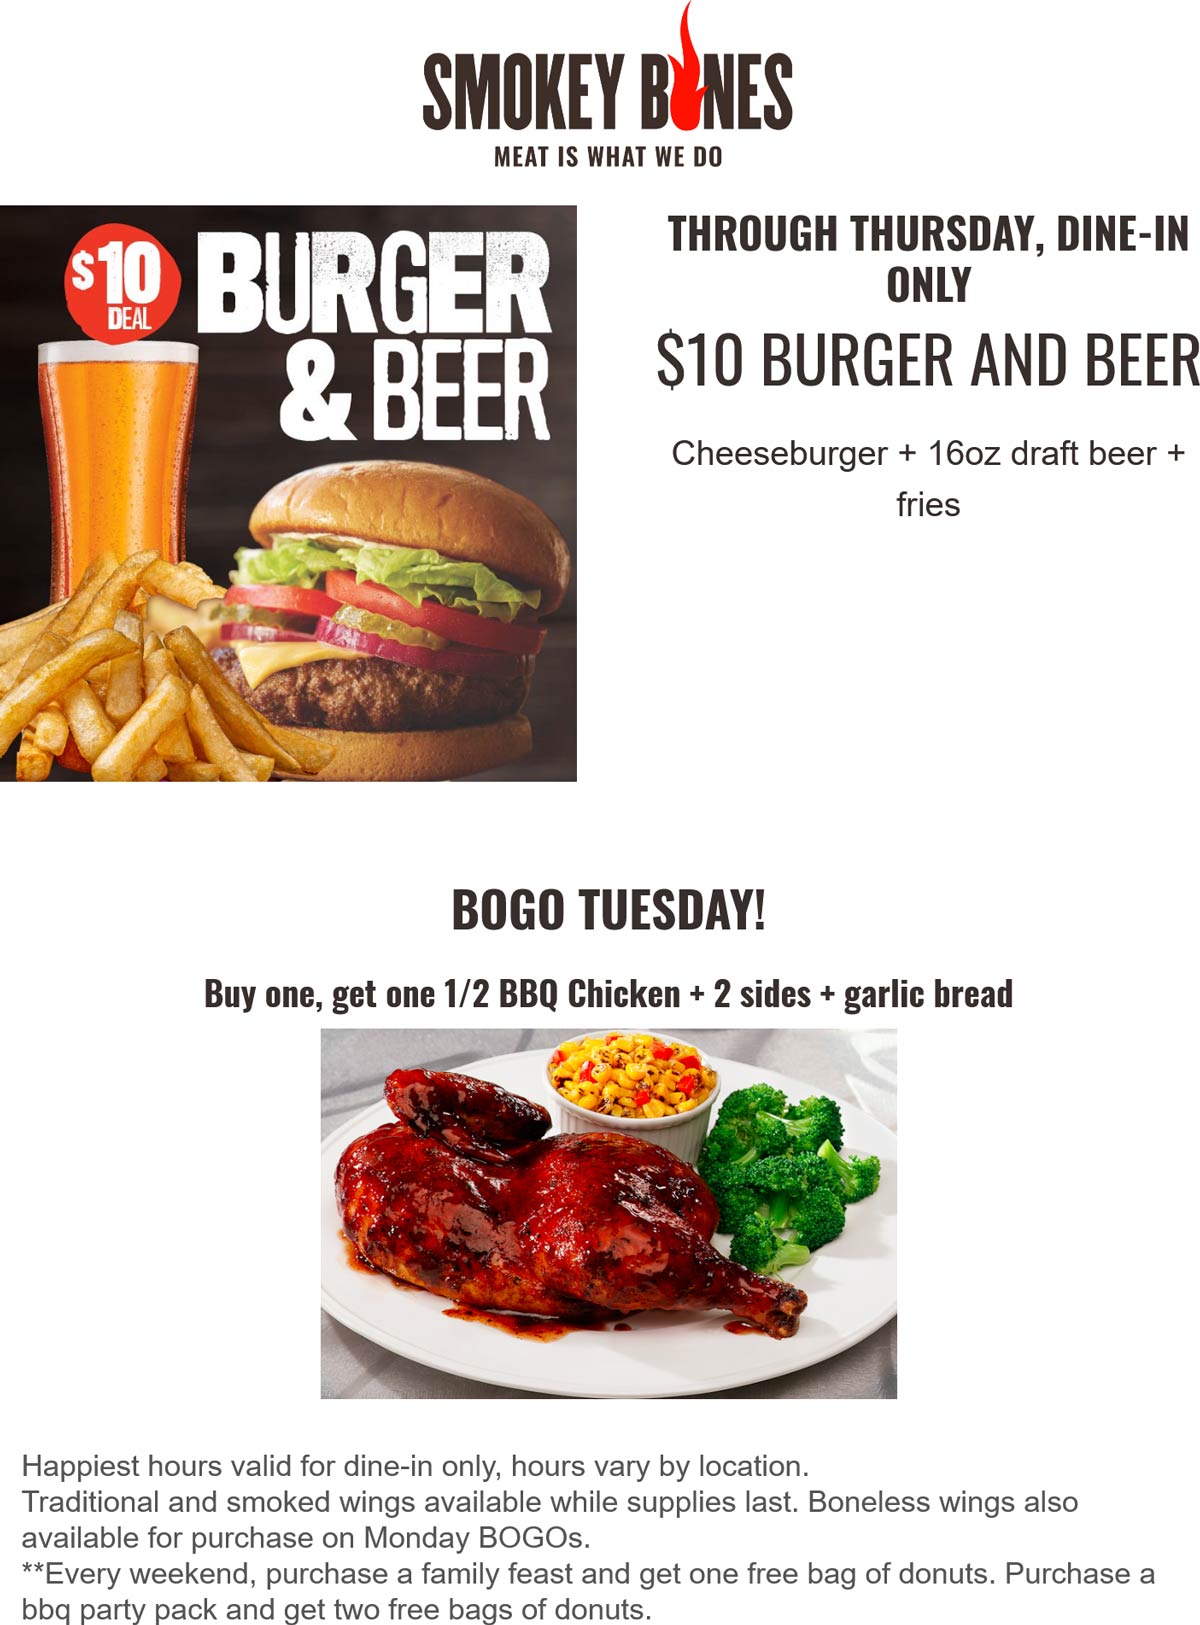 Smokey Bones restaurants Coupon  Cheeseburger + beer + fries = $10 & more at Smokey Bones #smokeybones 